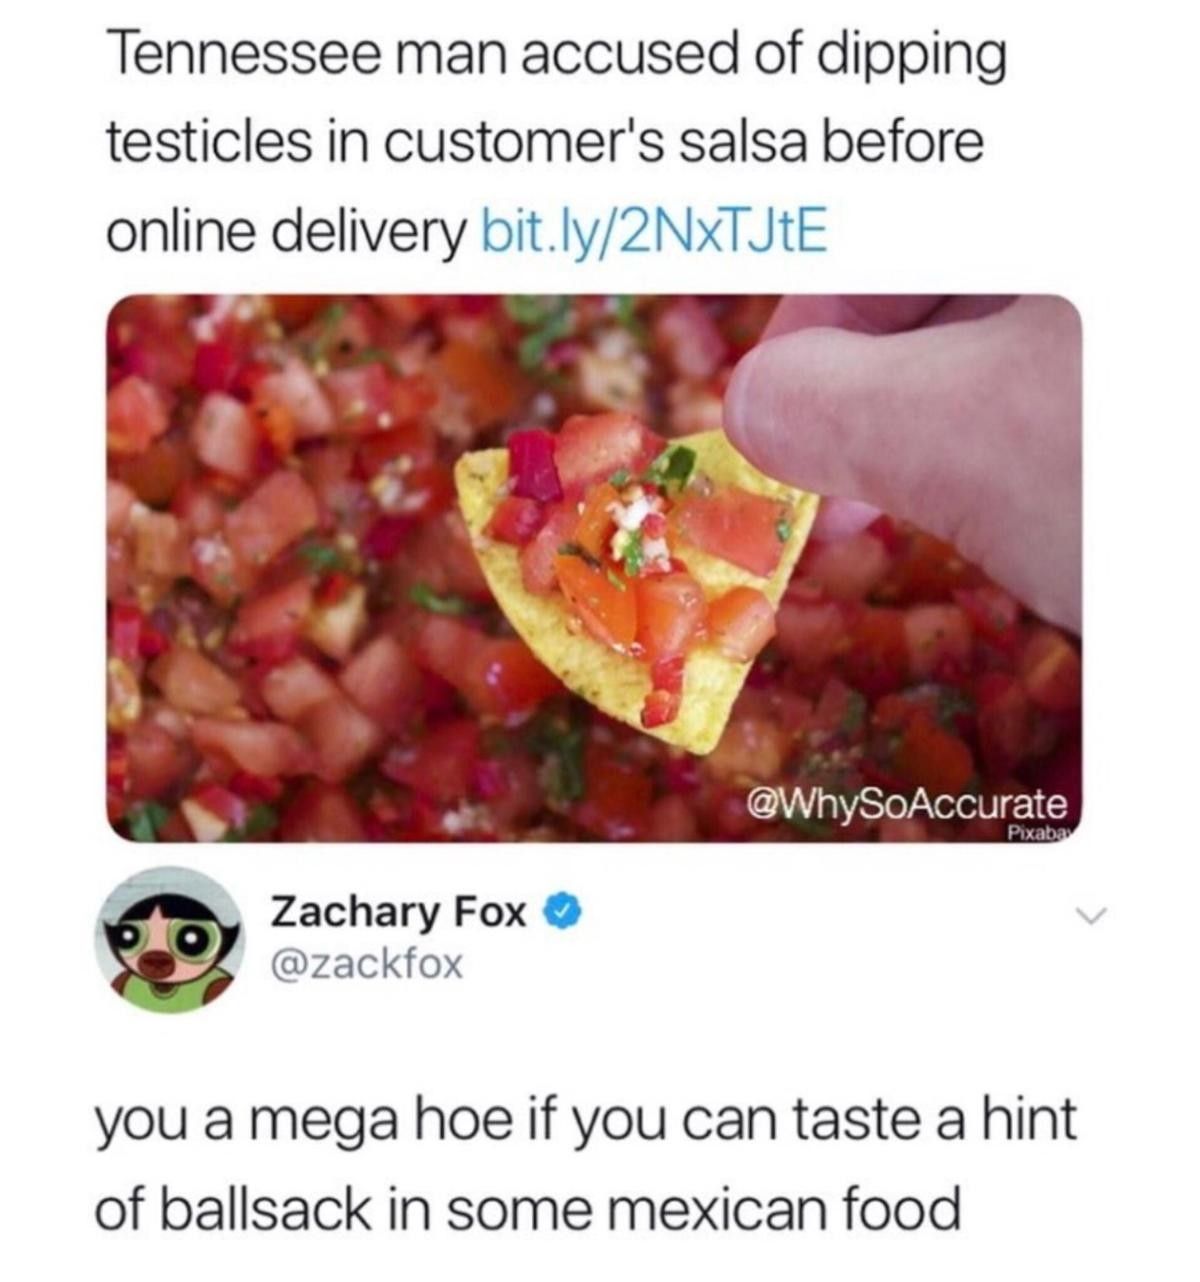 That's cause it's not salsa, it's fruit salad